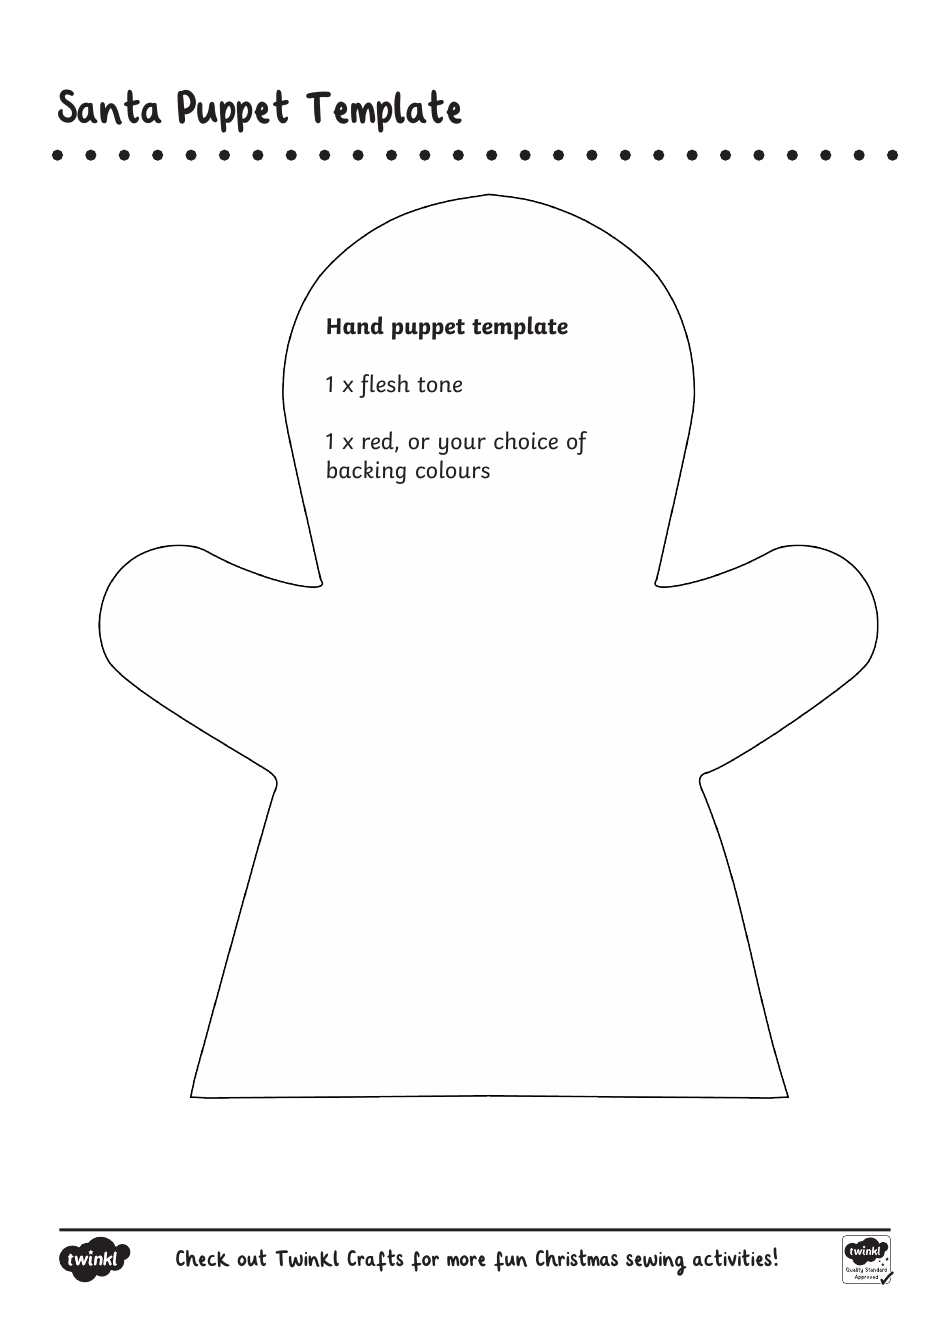 Santa Hand Puppet Templates - Free PDF Download